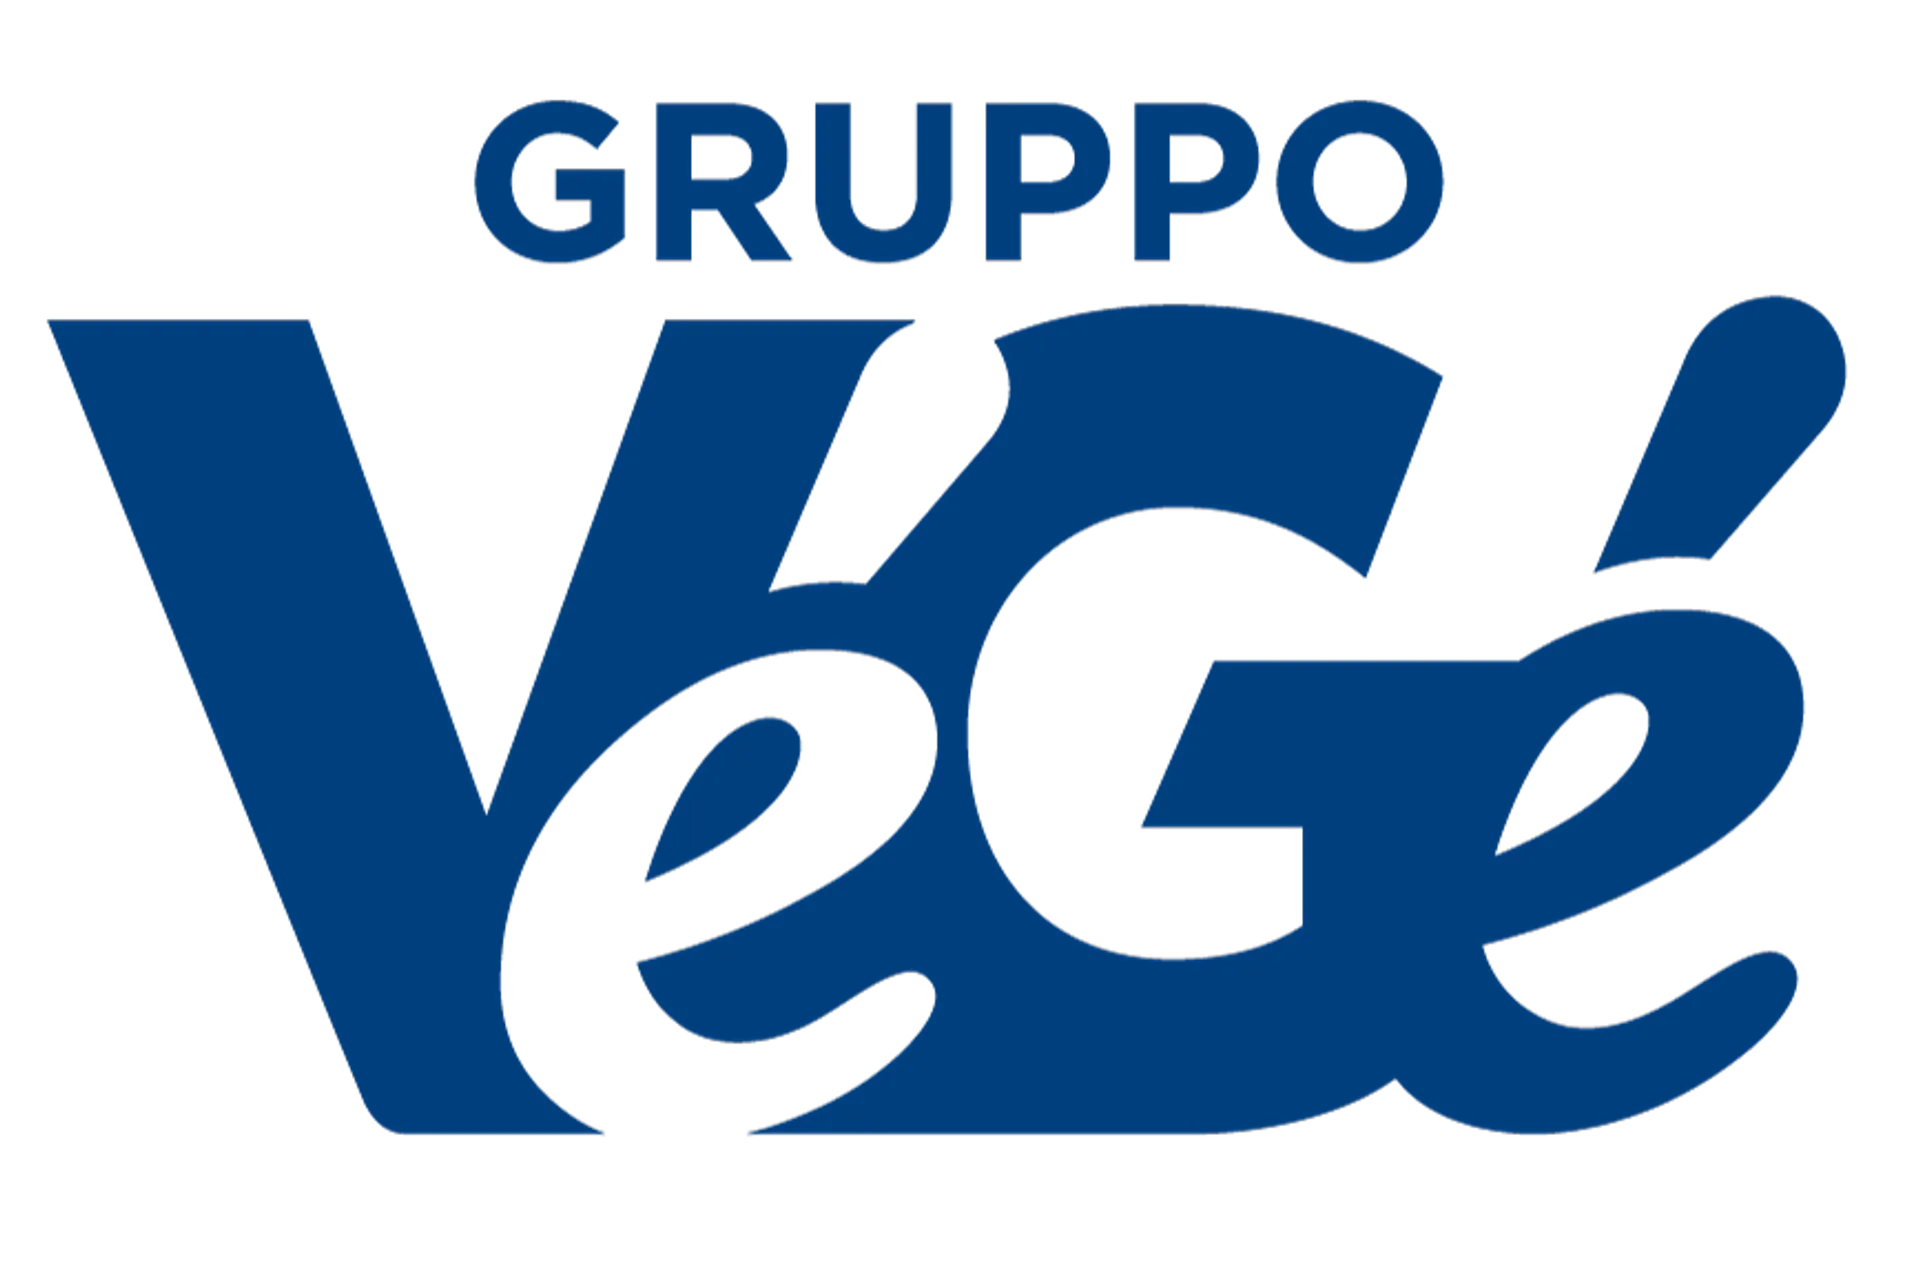 GRUPPO VÉGÉ logo